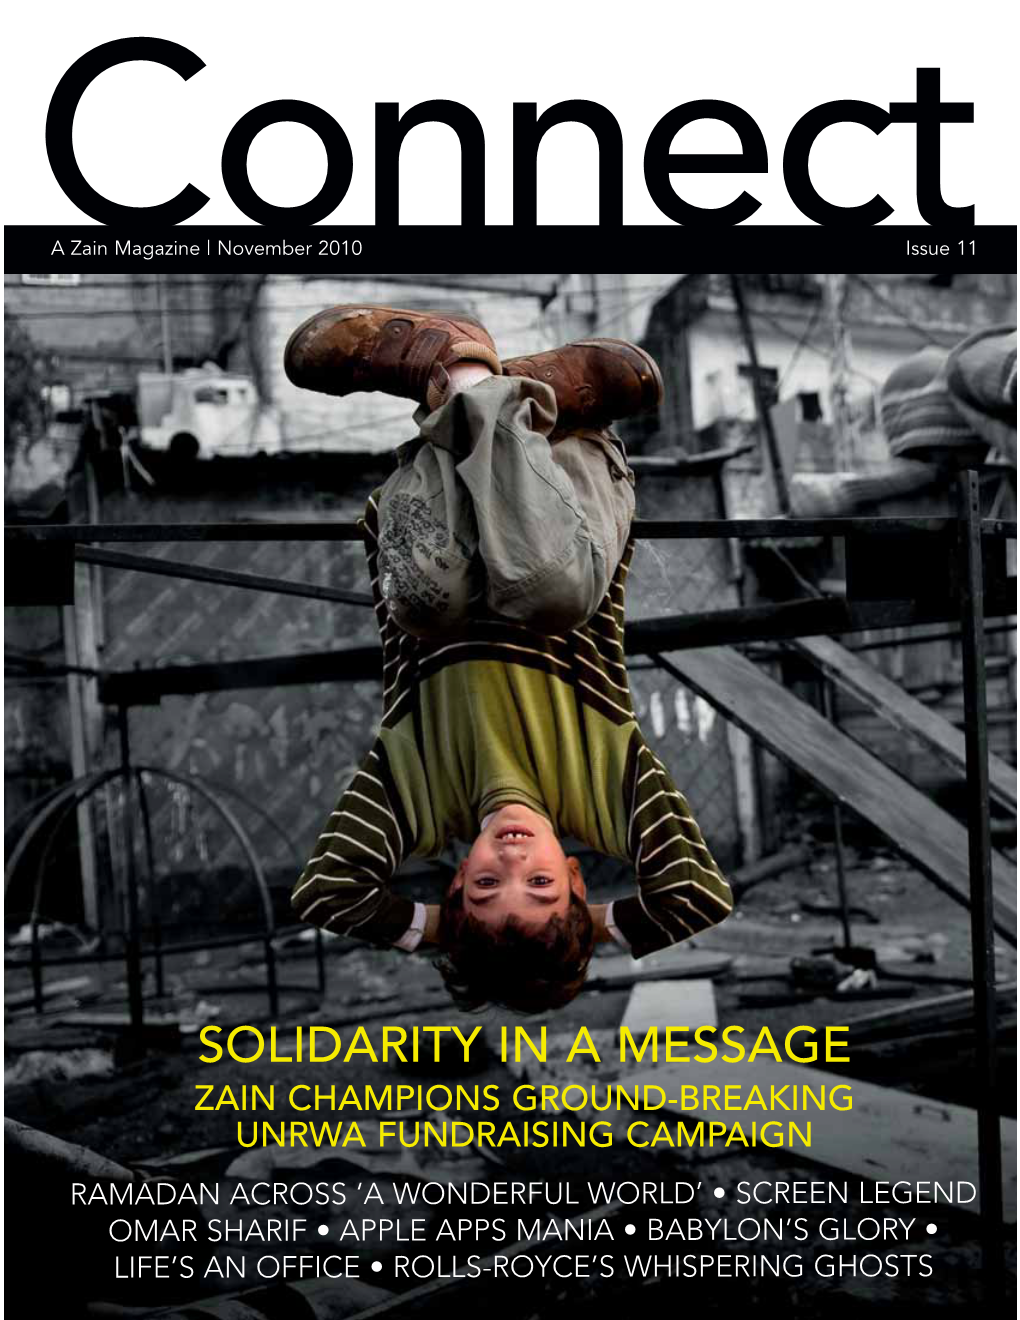 Connecta Zain Magazine | November 2010 Issue 11